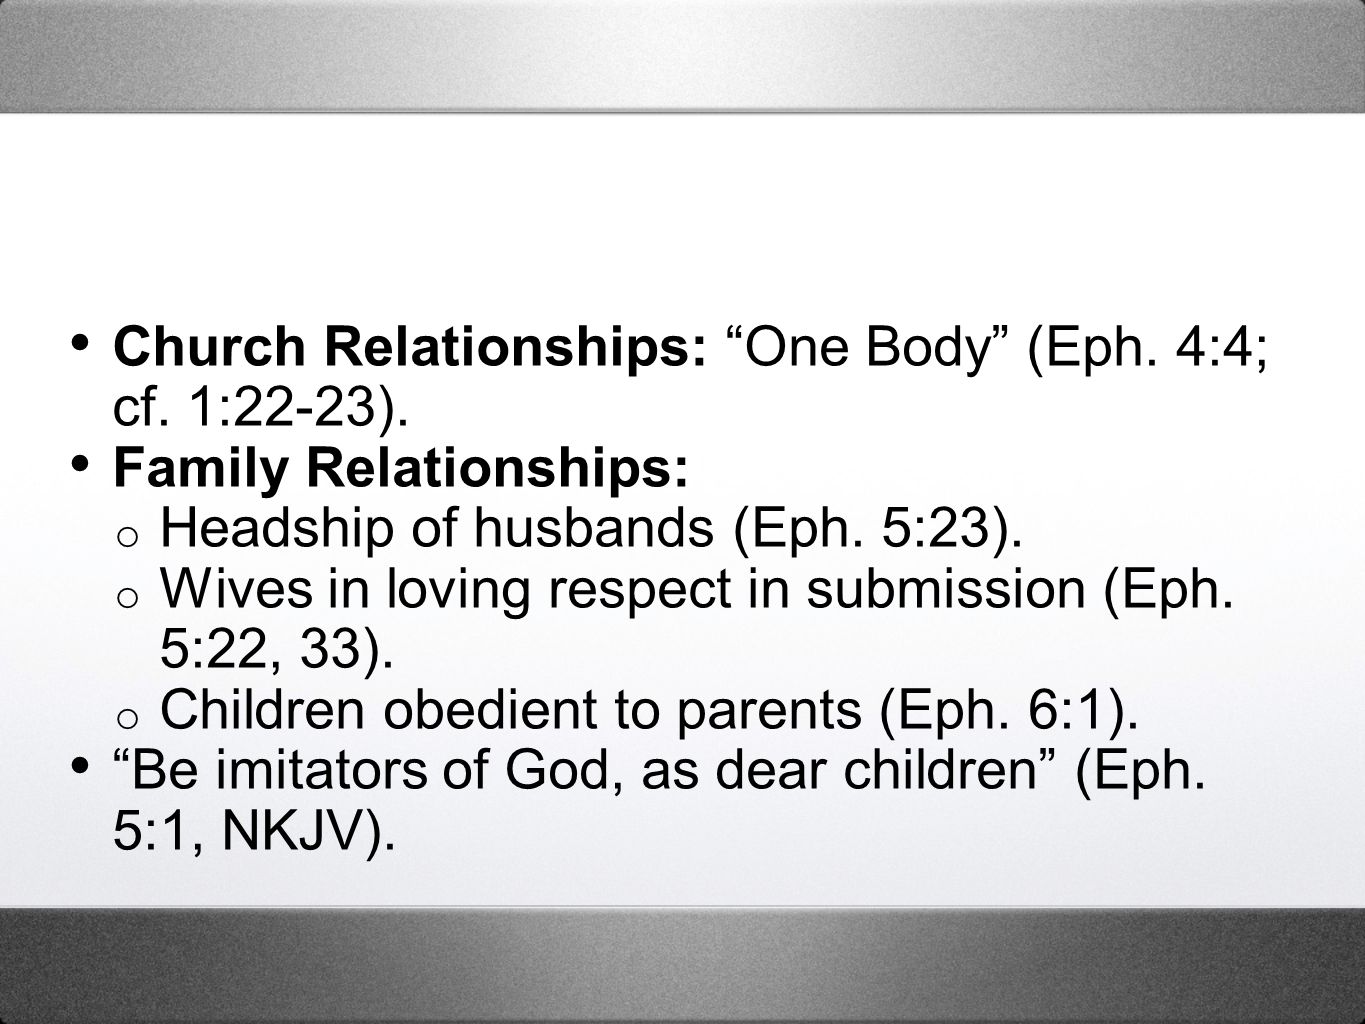 Church Relationships: One Body (Eph. 4:4; cf. 1:22-23).